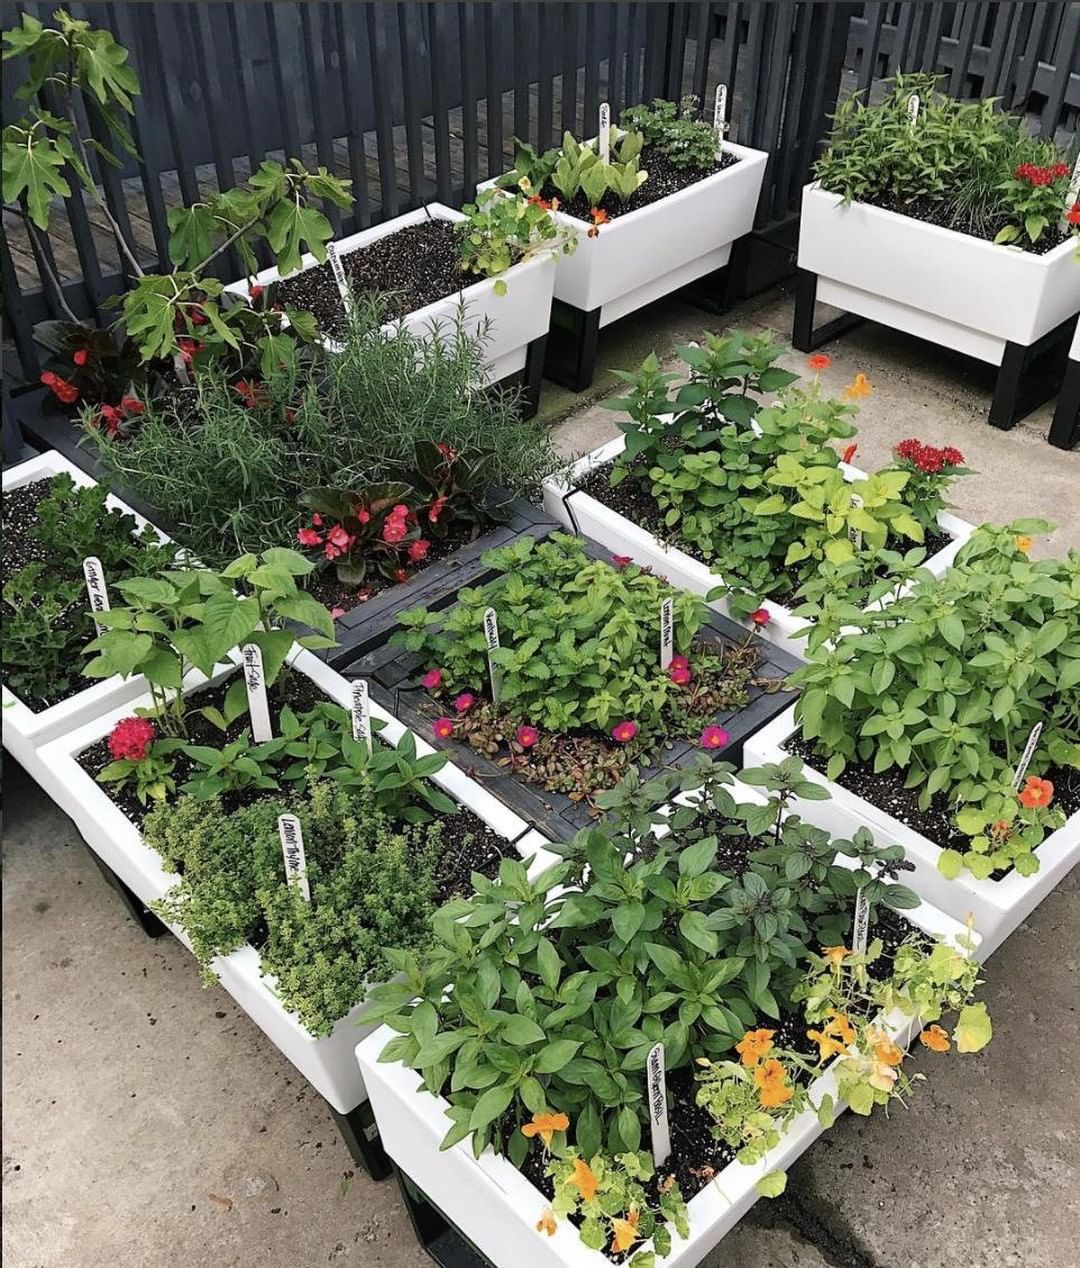 https://www.extraspace.com/blog/wp-content/uploads/2018/07/use-elevated-planters-urban-garden.jpg